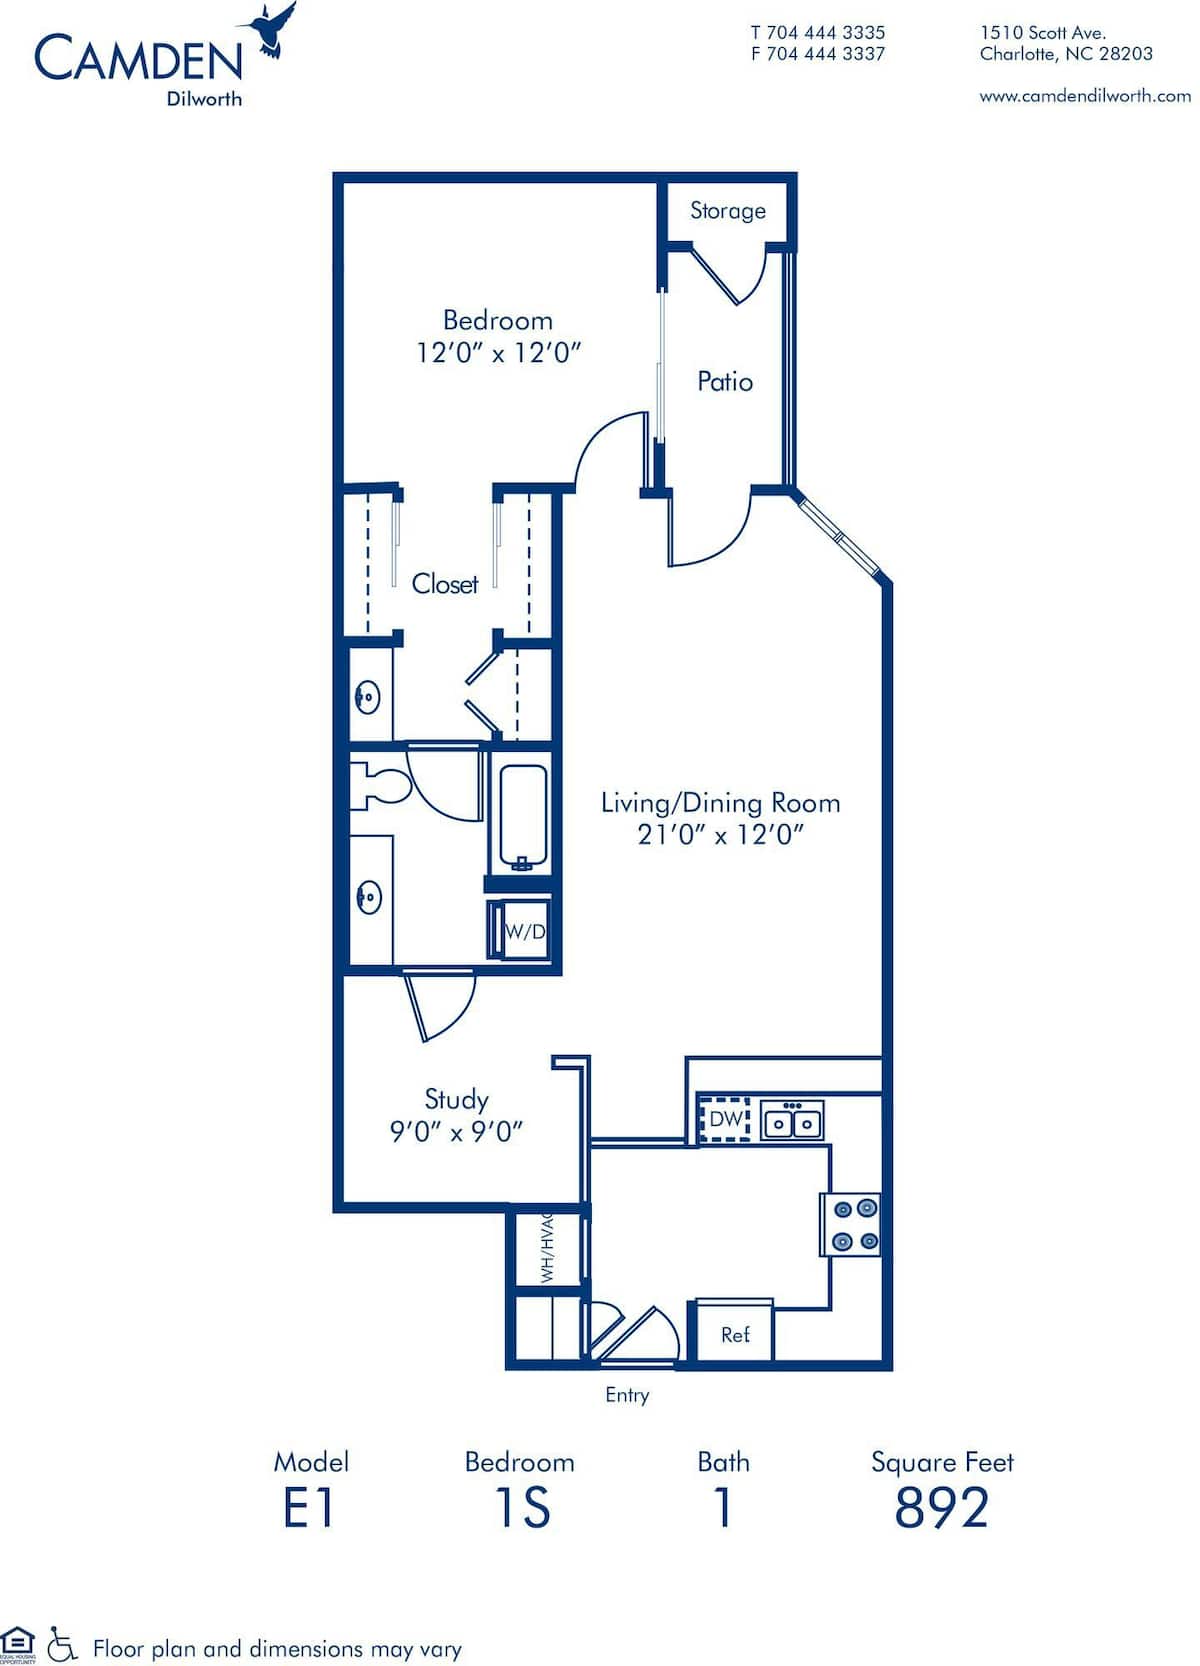 Floorplan diagram for E1, showing 1 bedroom